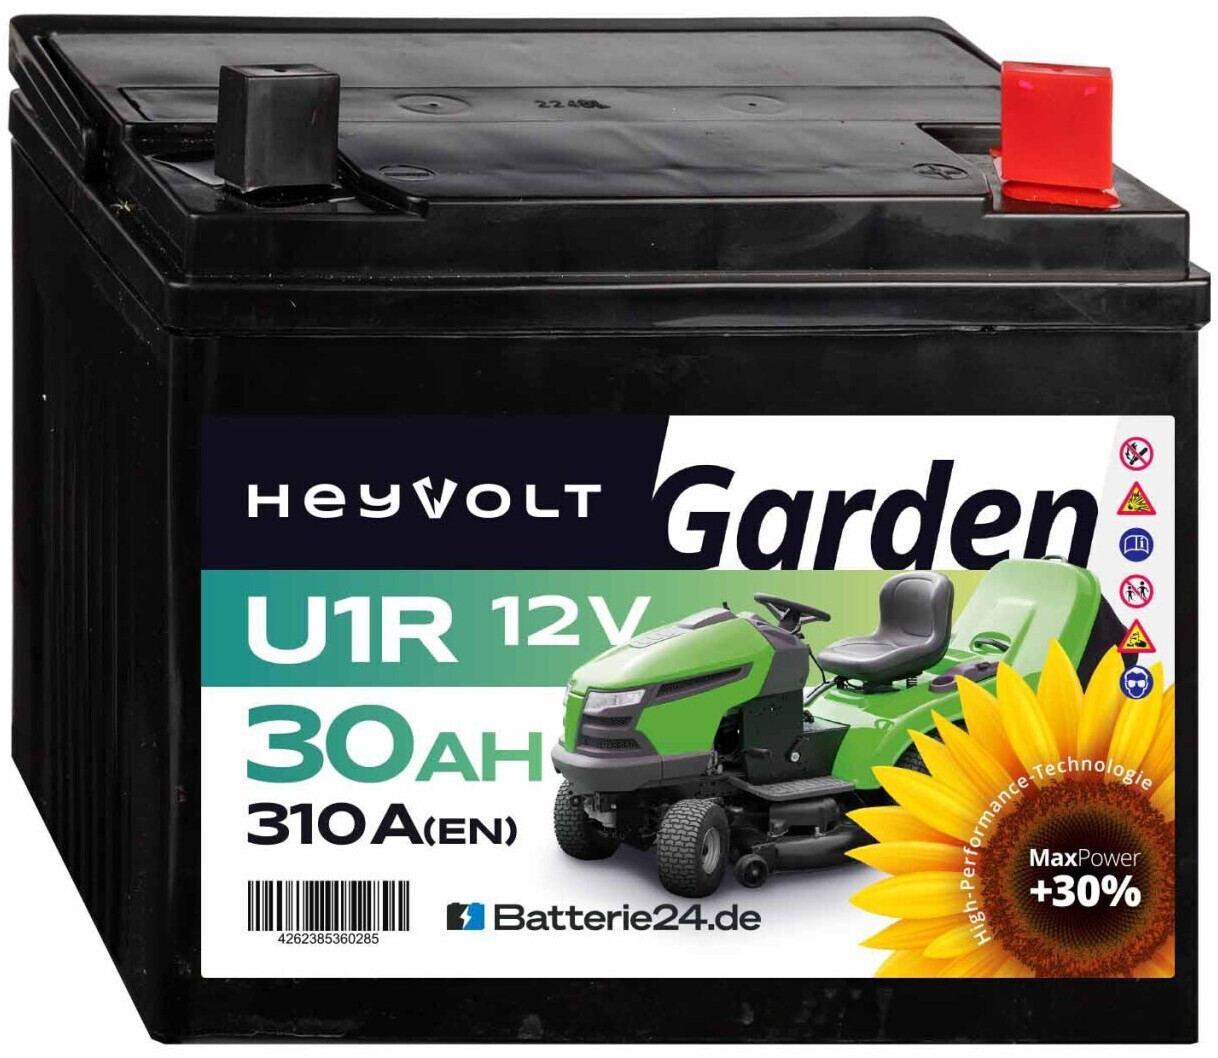 HeyVolt Garden U1R 12V 30Ah ab 36,90 €